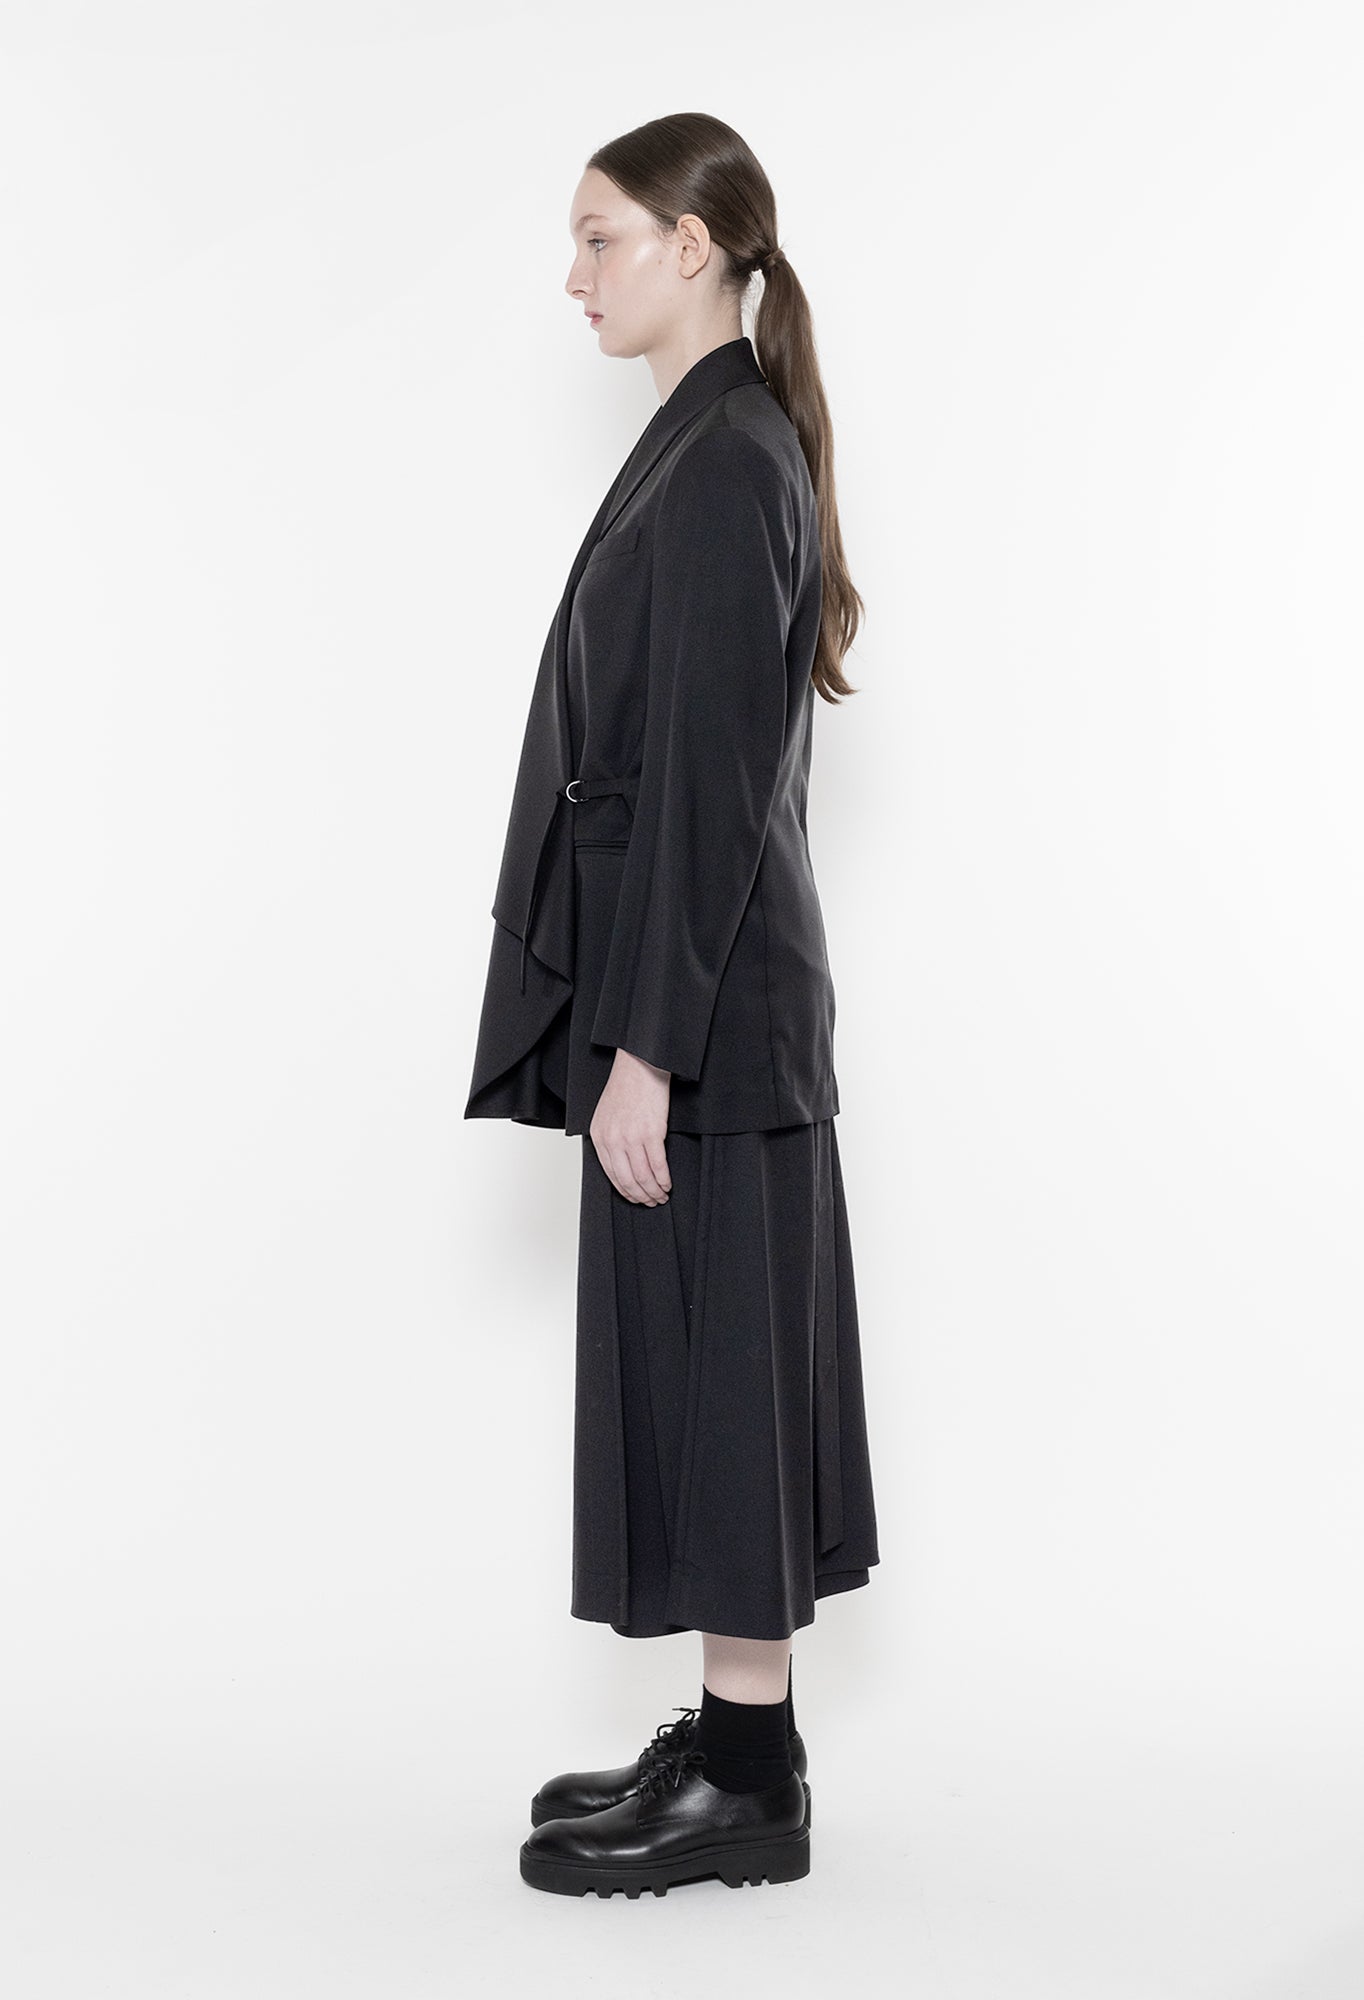 WEIMAR - Asymmetric Wool Gabardine Jacket in Black